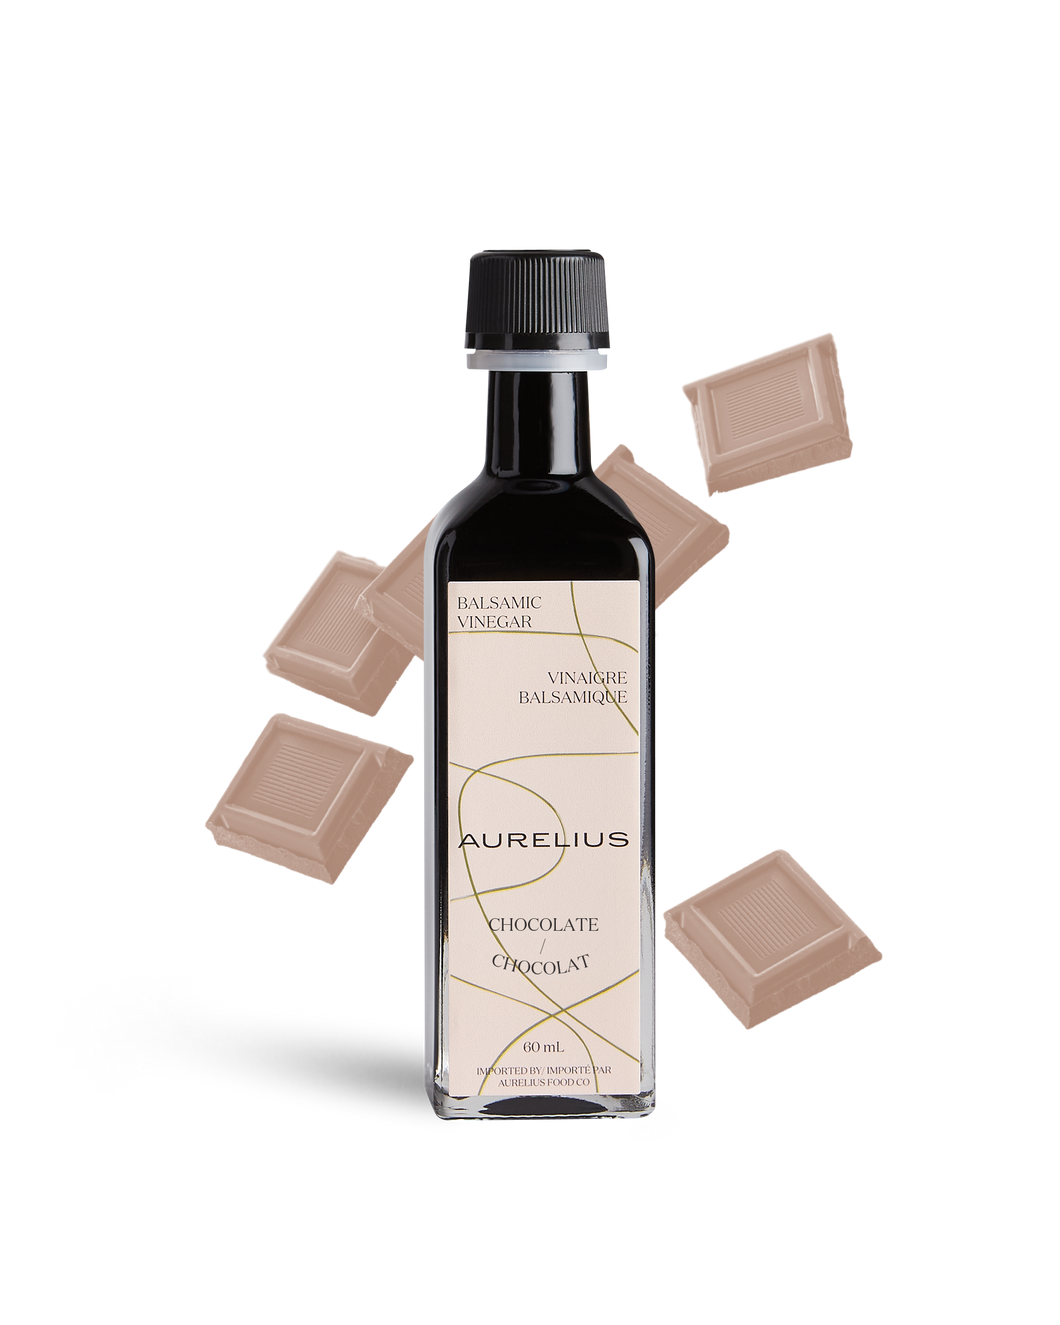 Chocolate Balsamic Vinegar